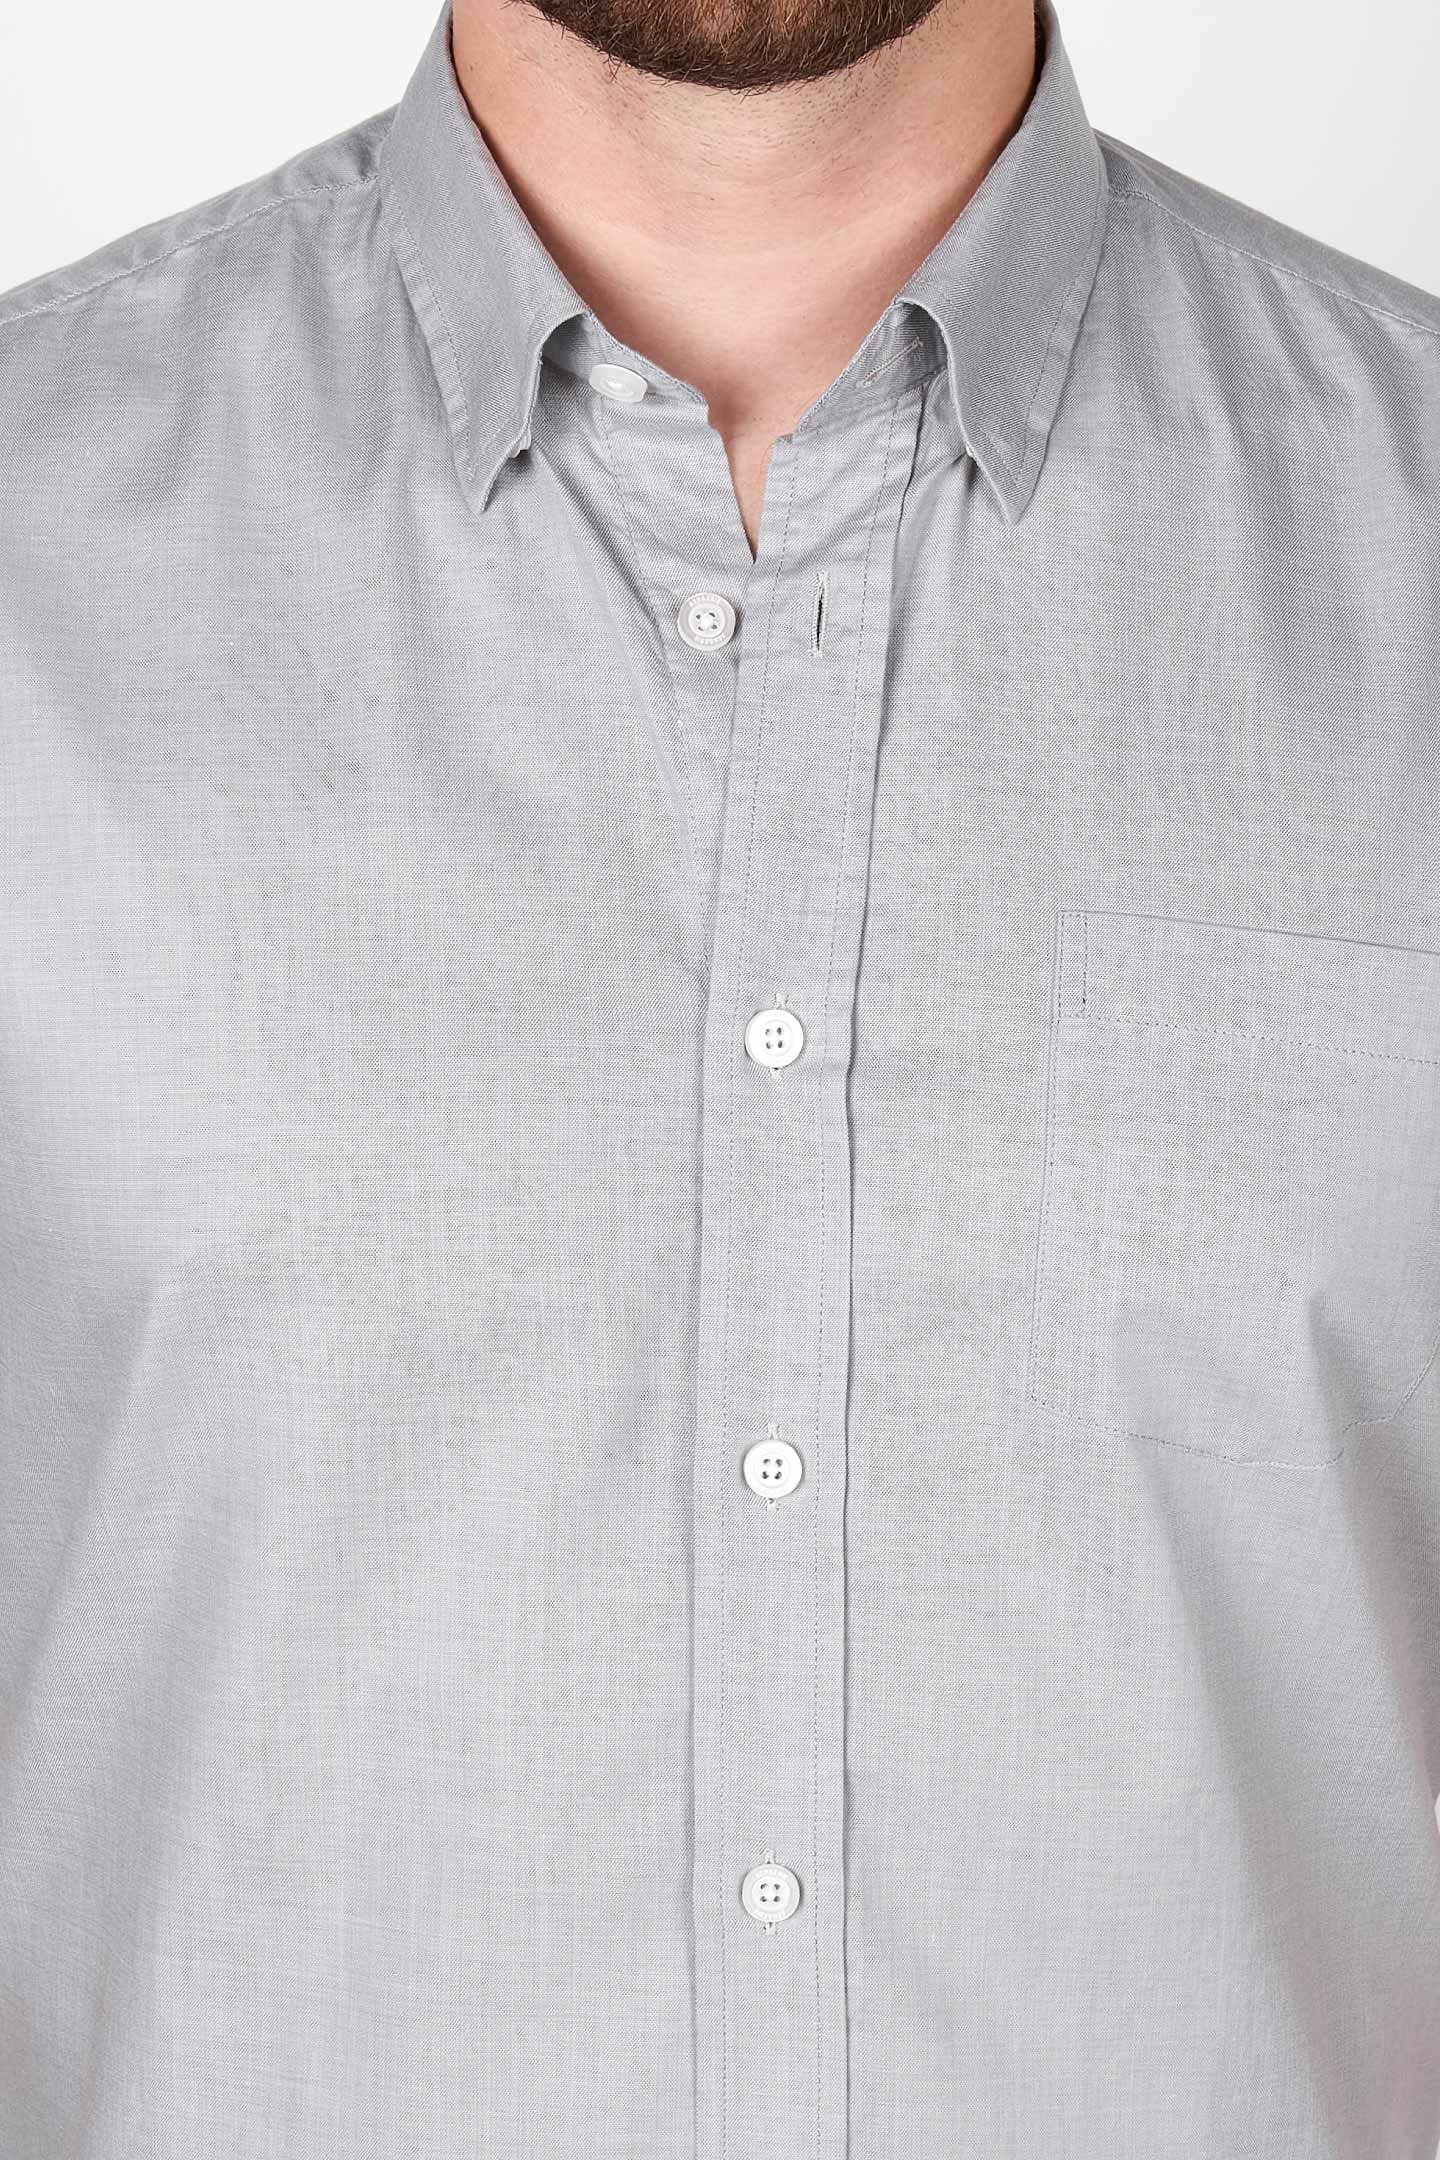 The Everyday Shirt - Concrete Short Sleeve   Short Sleeve Everyday Shirts